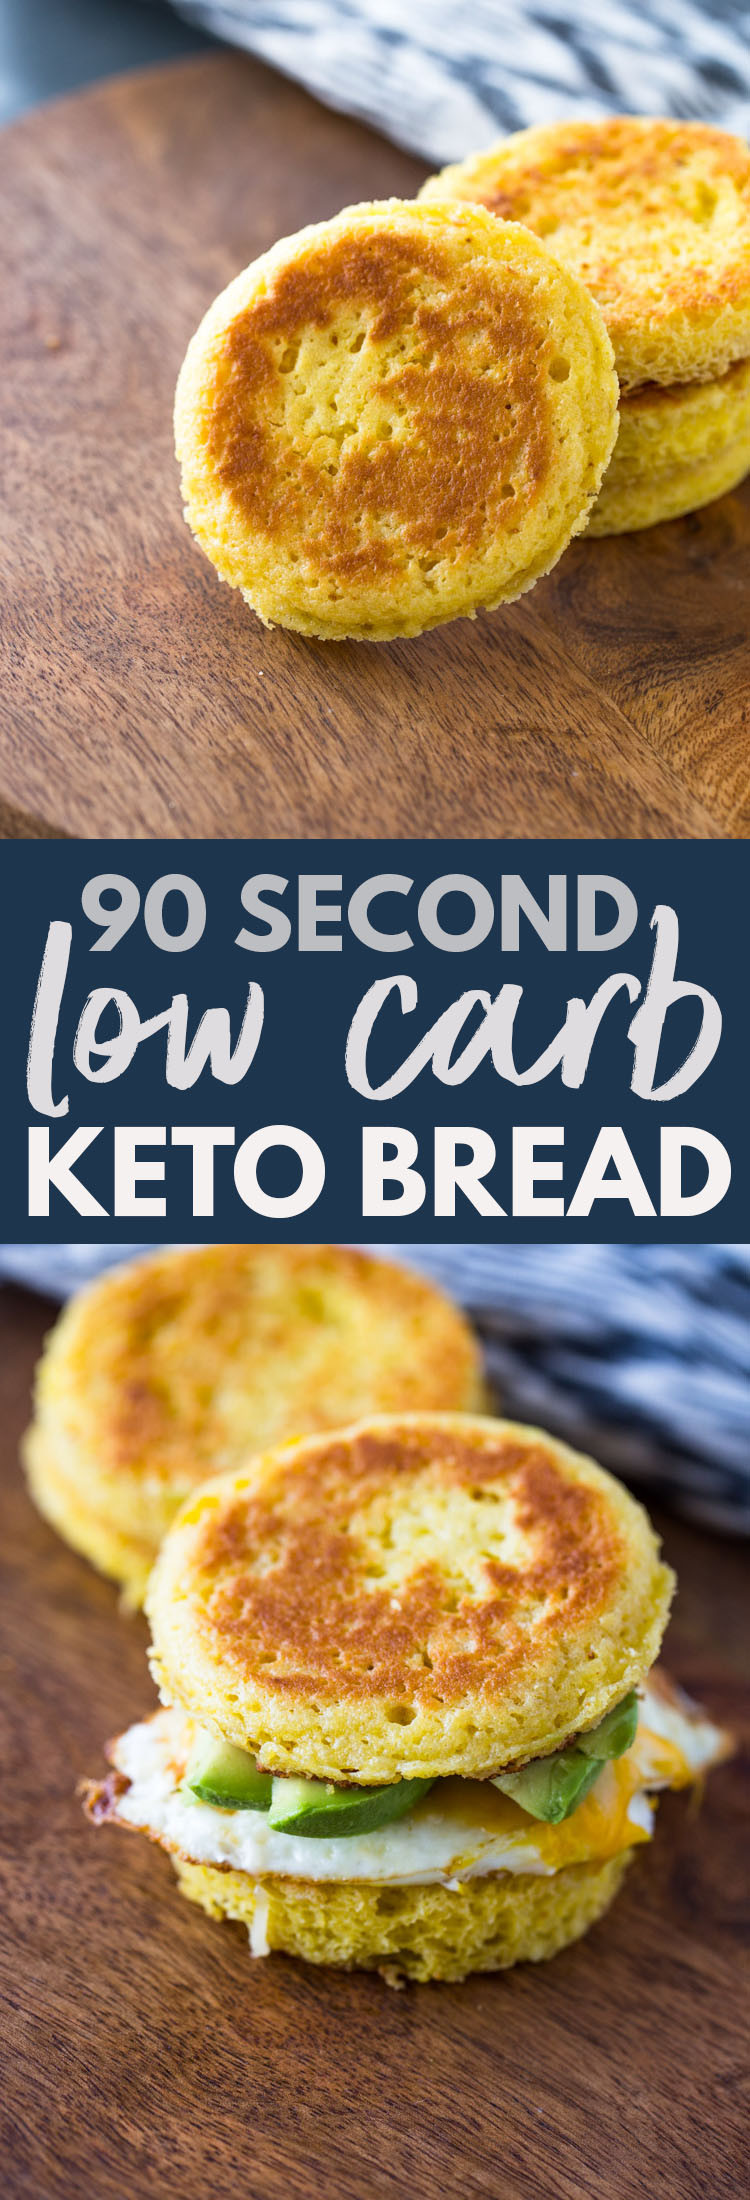 90 Second Keto Bread Recipes
 90 Second Microwavable Low Carb Keto Bread